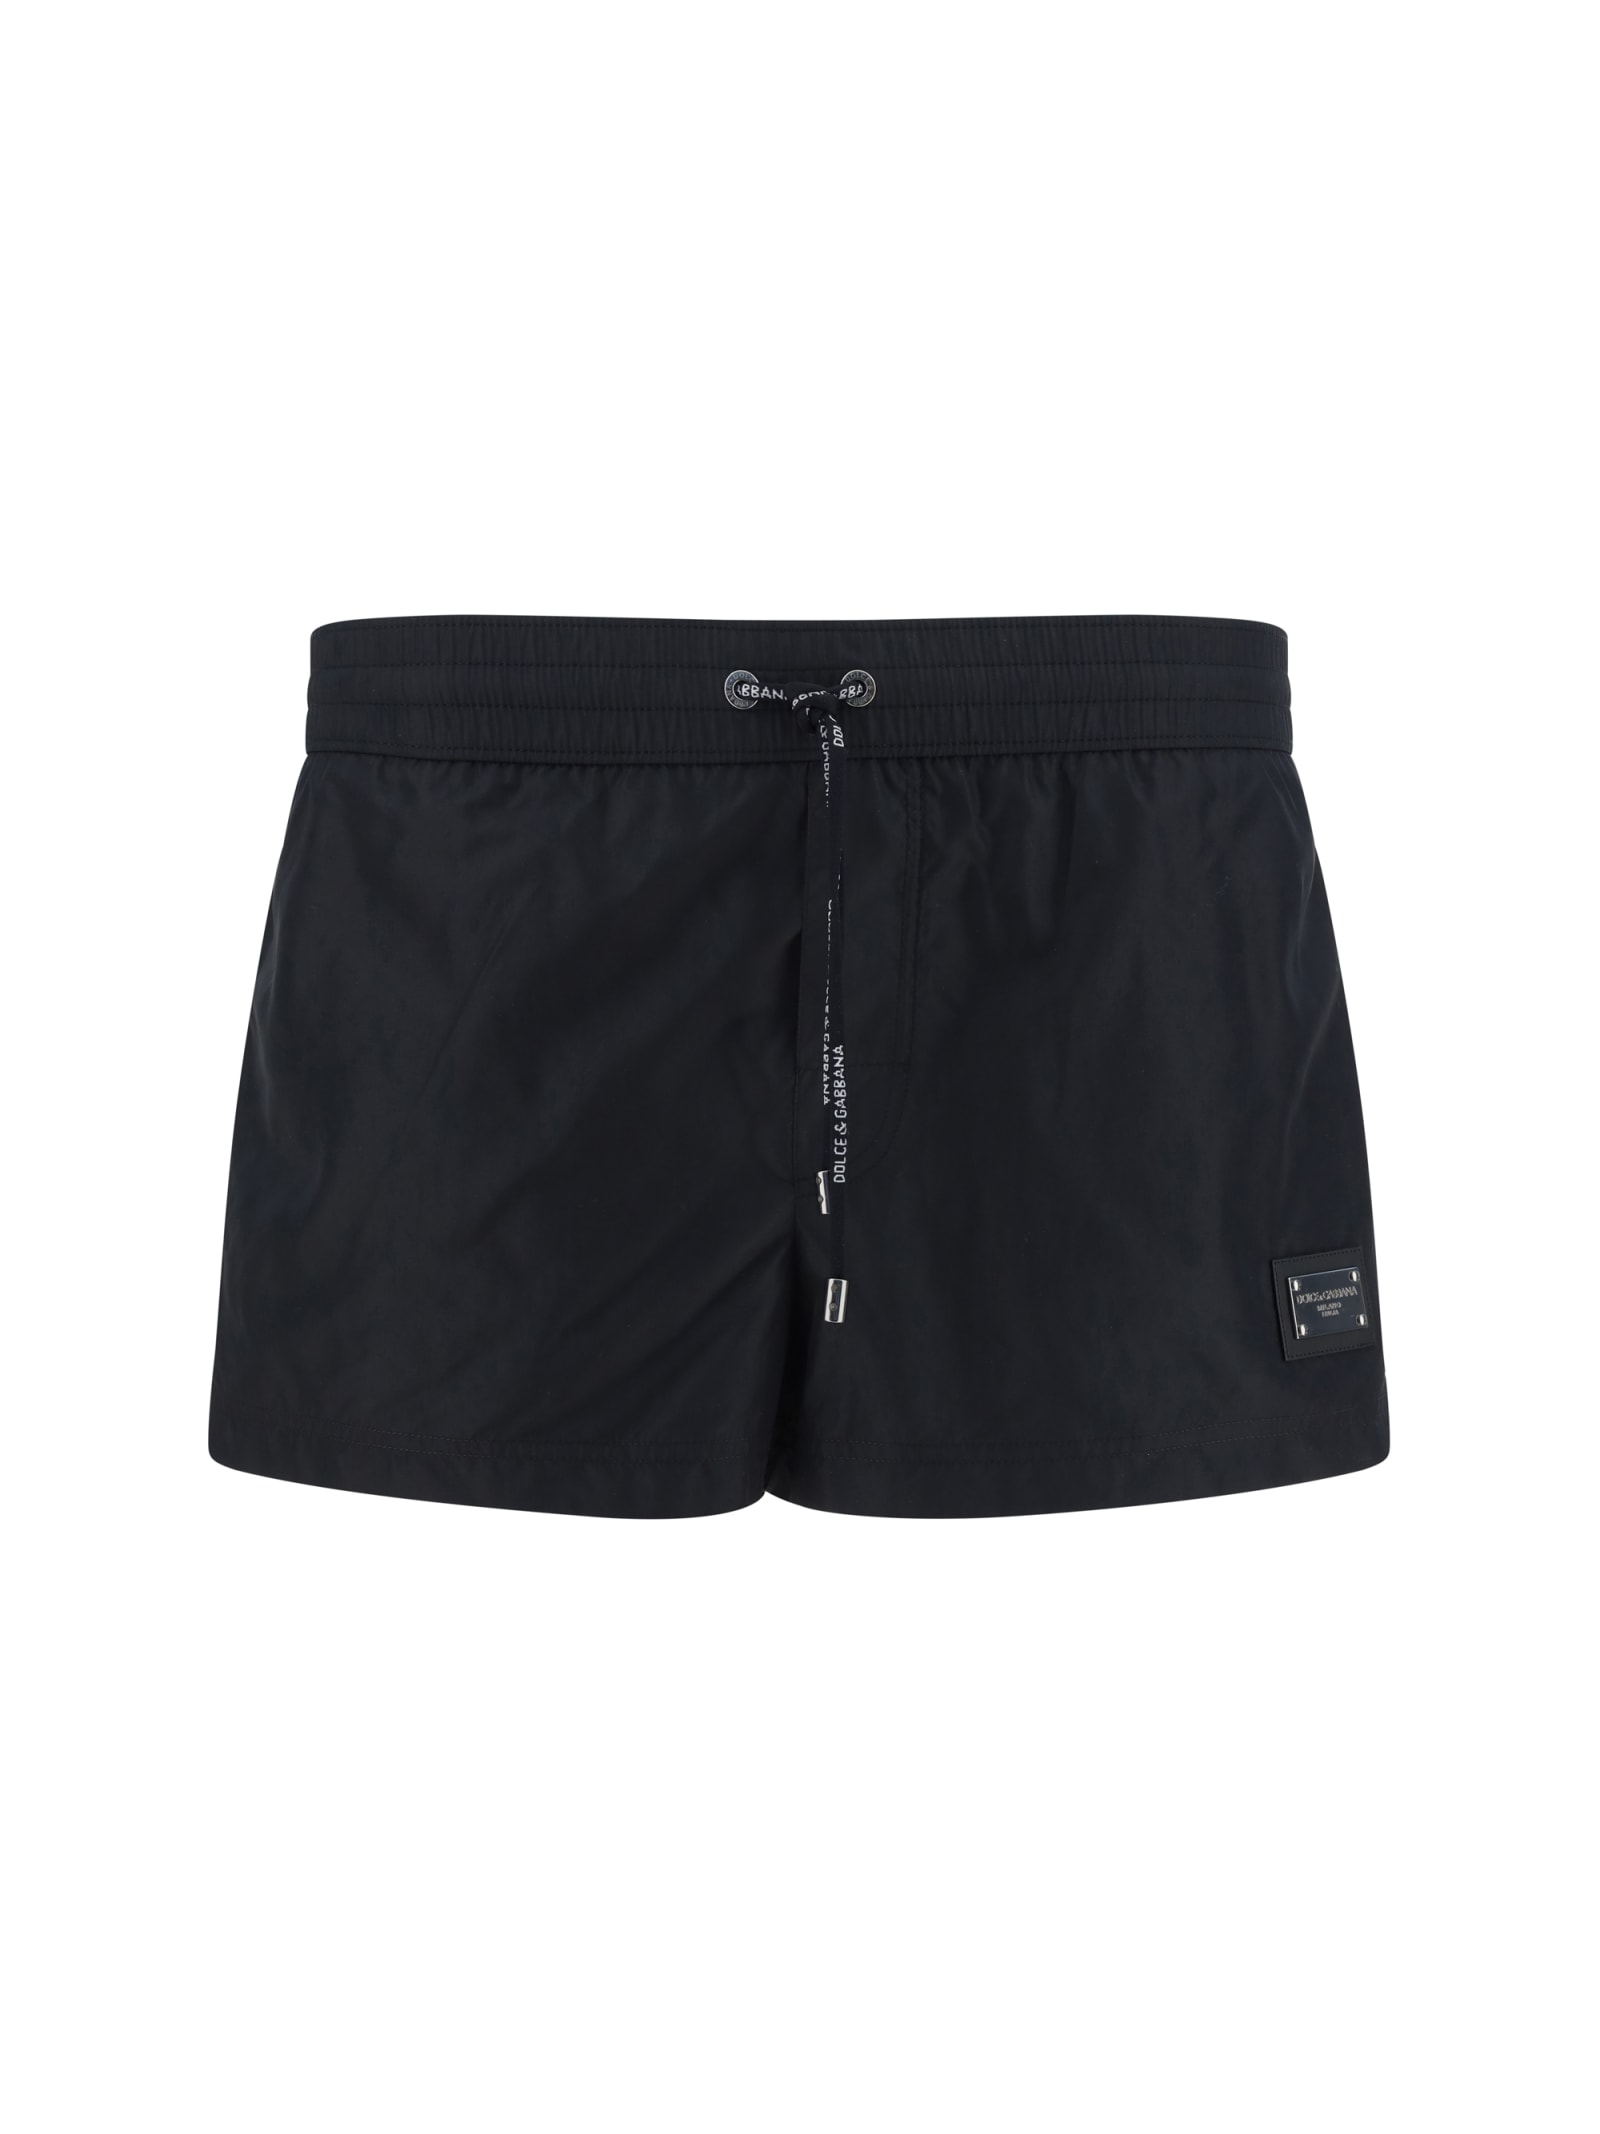 Short Beach Boxer Shorts